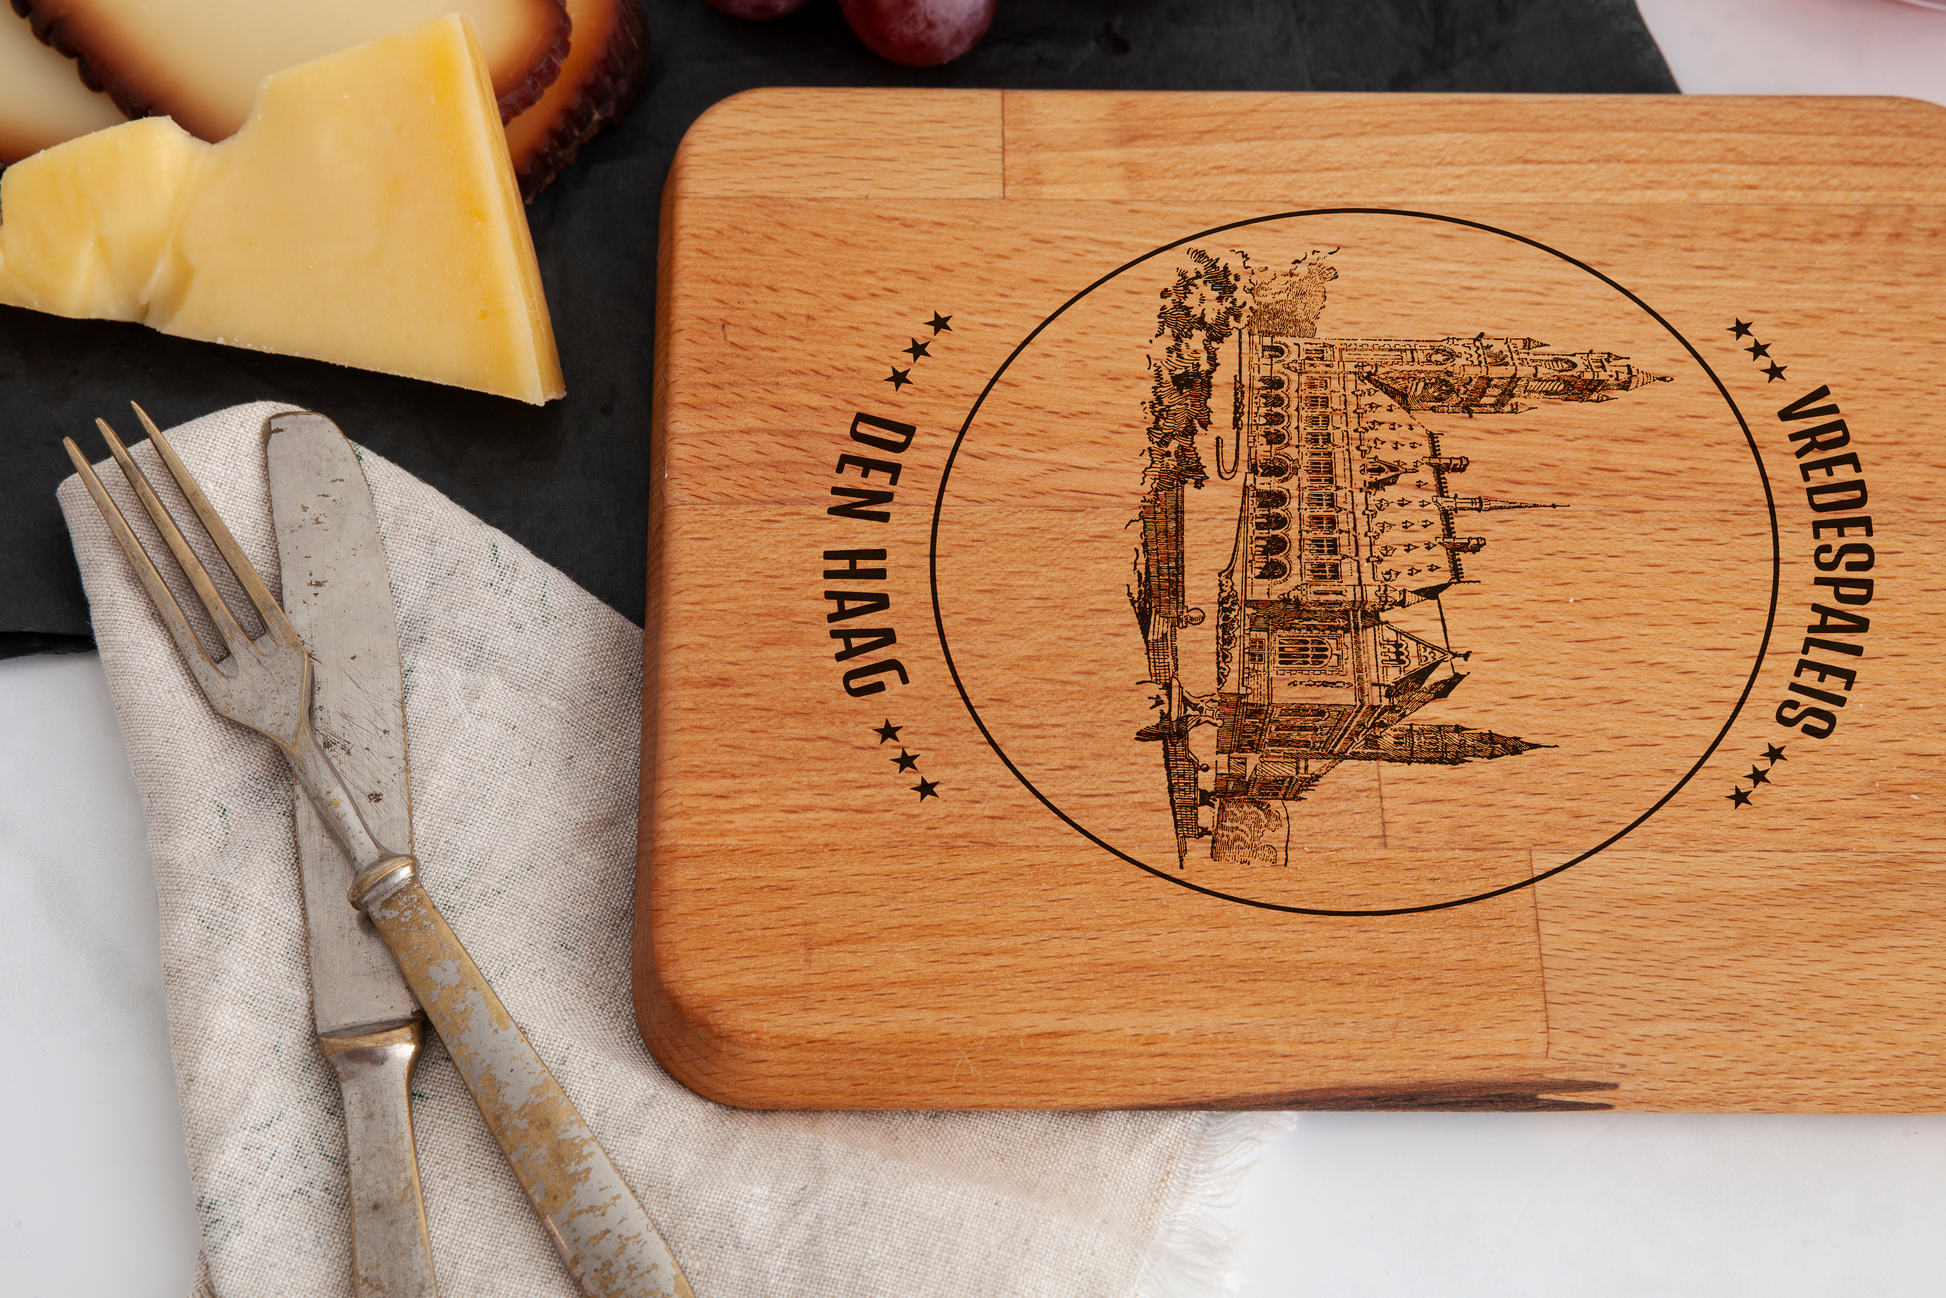 Den Haag, Vredespaleis, cheese board, wood grain